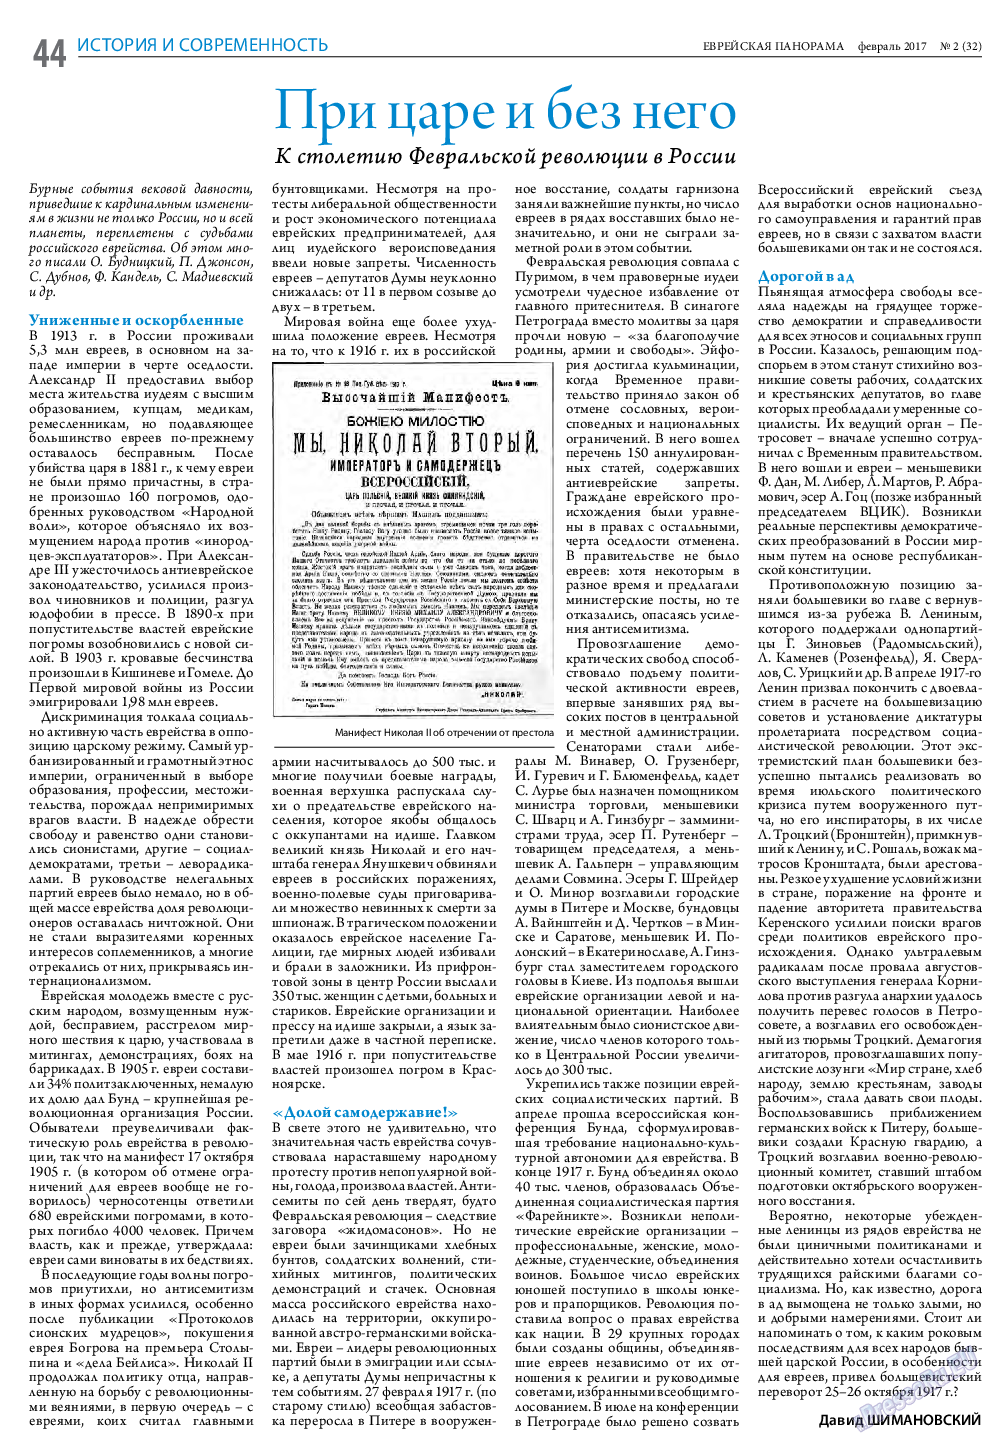 Еврейская панорама, газета. 2017 №2 стр.44